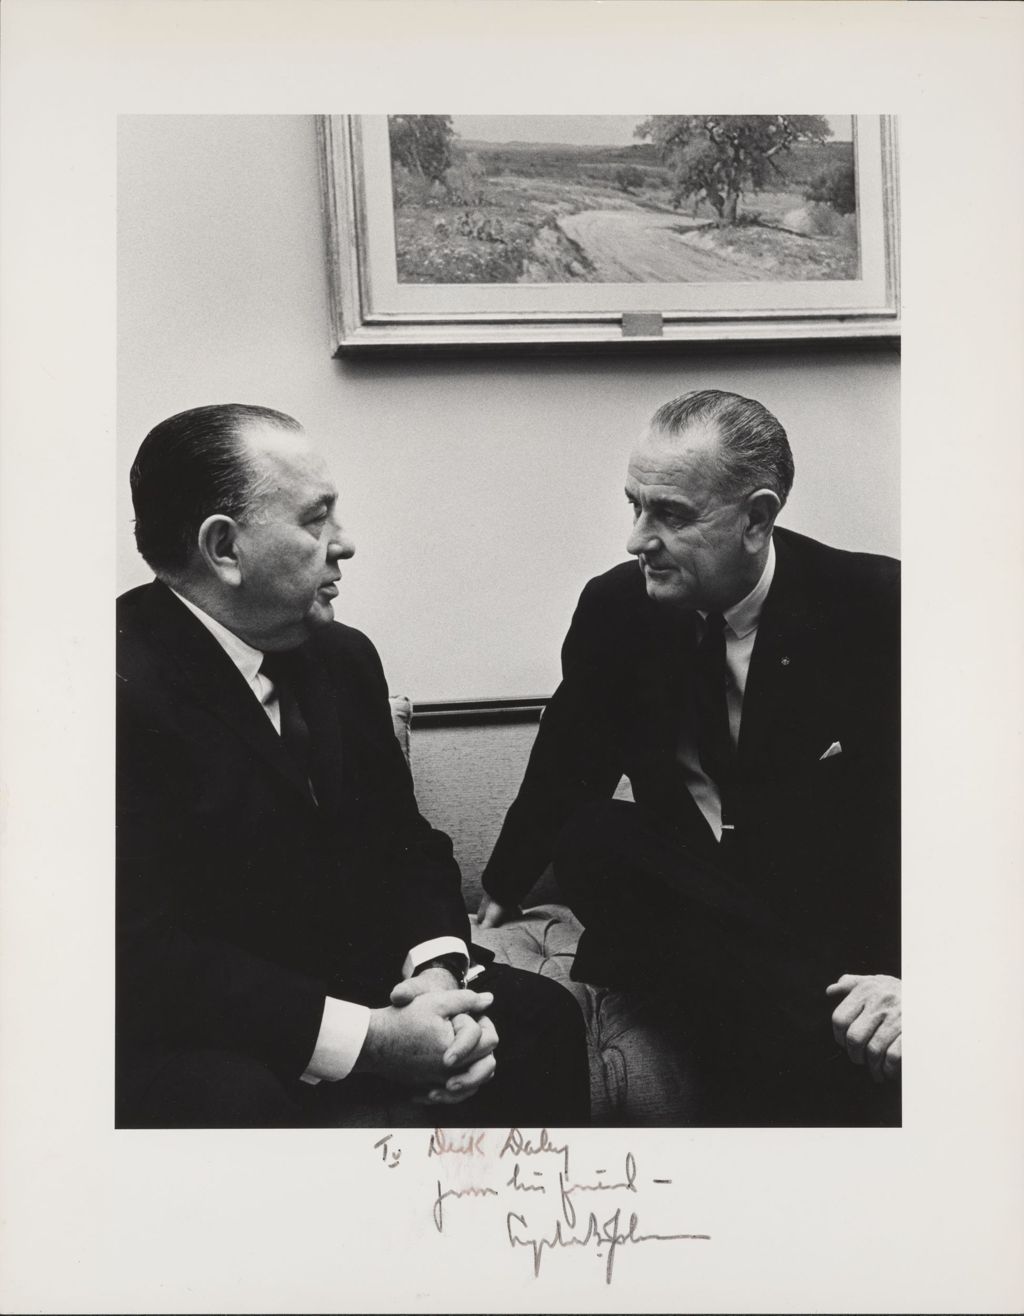 Miniature of Richard J. Daley and Lyndon B. Johnson in conversation